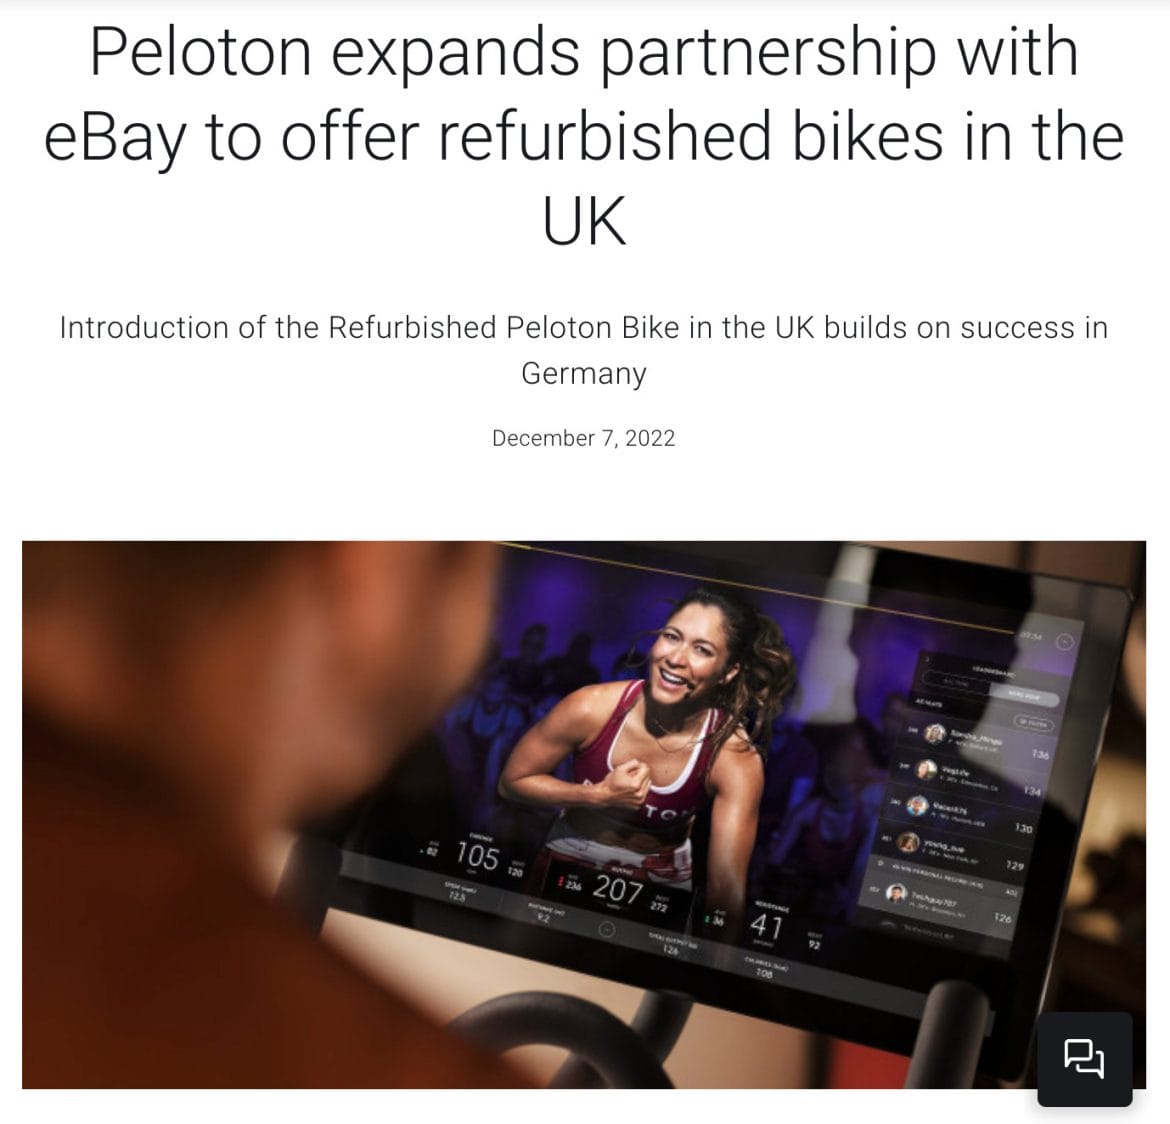 Peloton press release regarding expansion with eBay into United Kingdom.